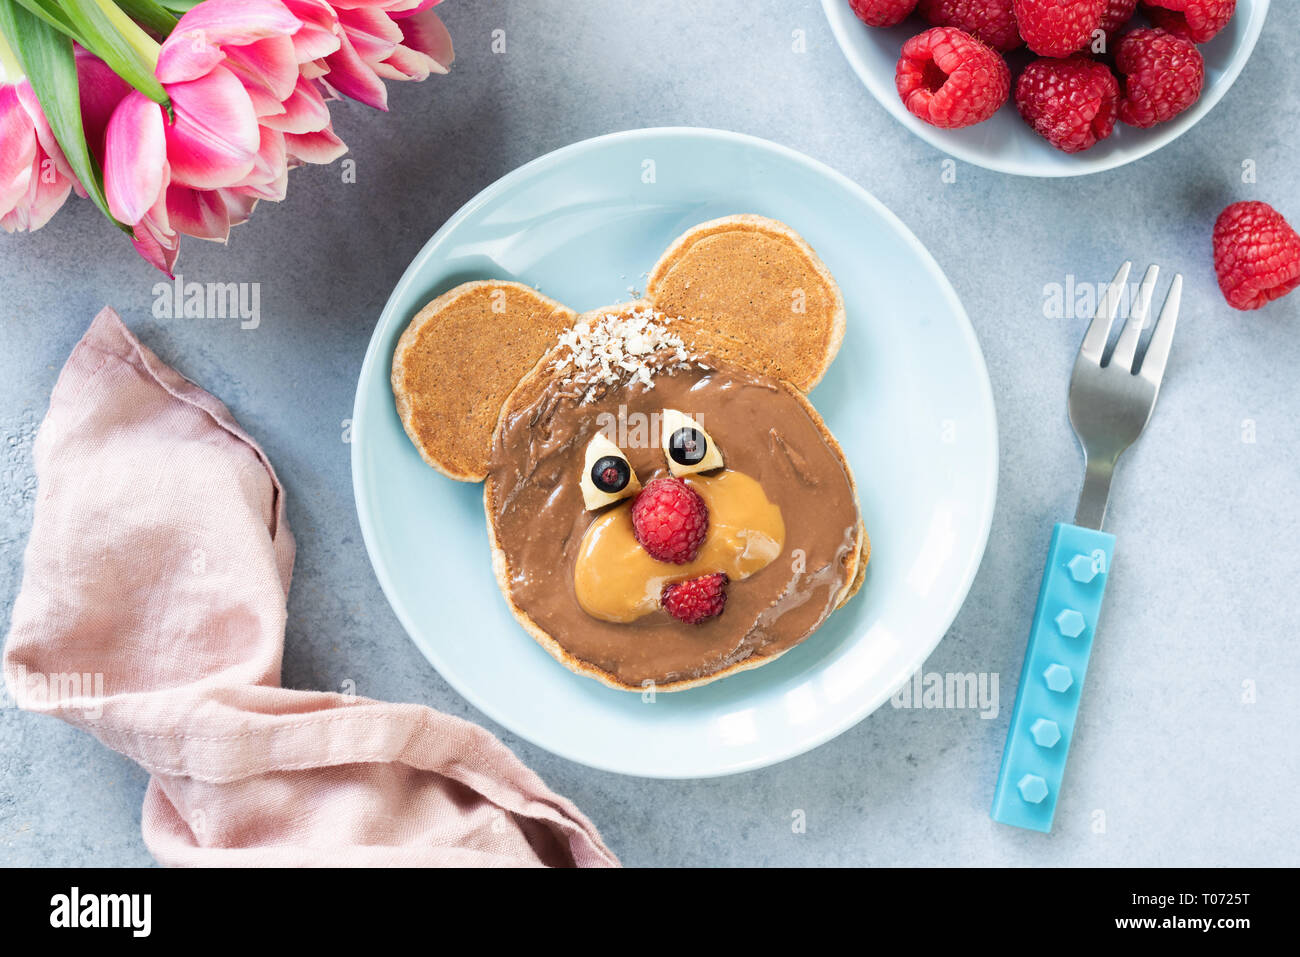 Cute bear shape pancake with nut butter for kids healthy breakfast. Creative kids food idea, food art. Top view. Stock Photo